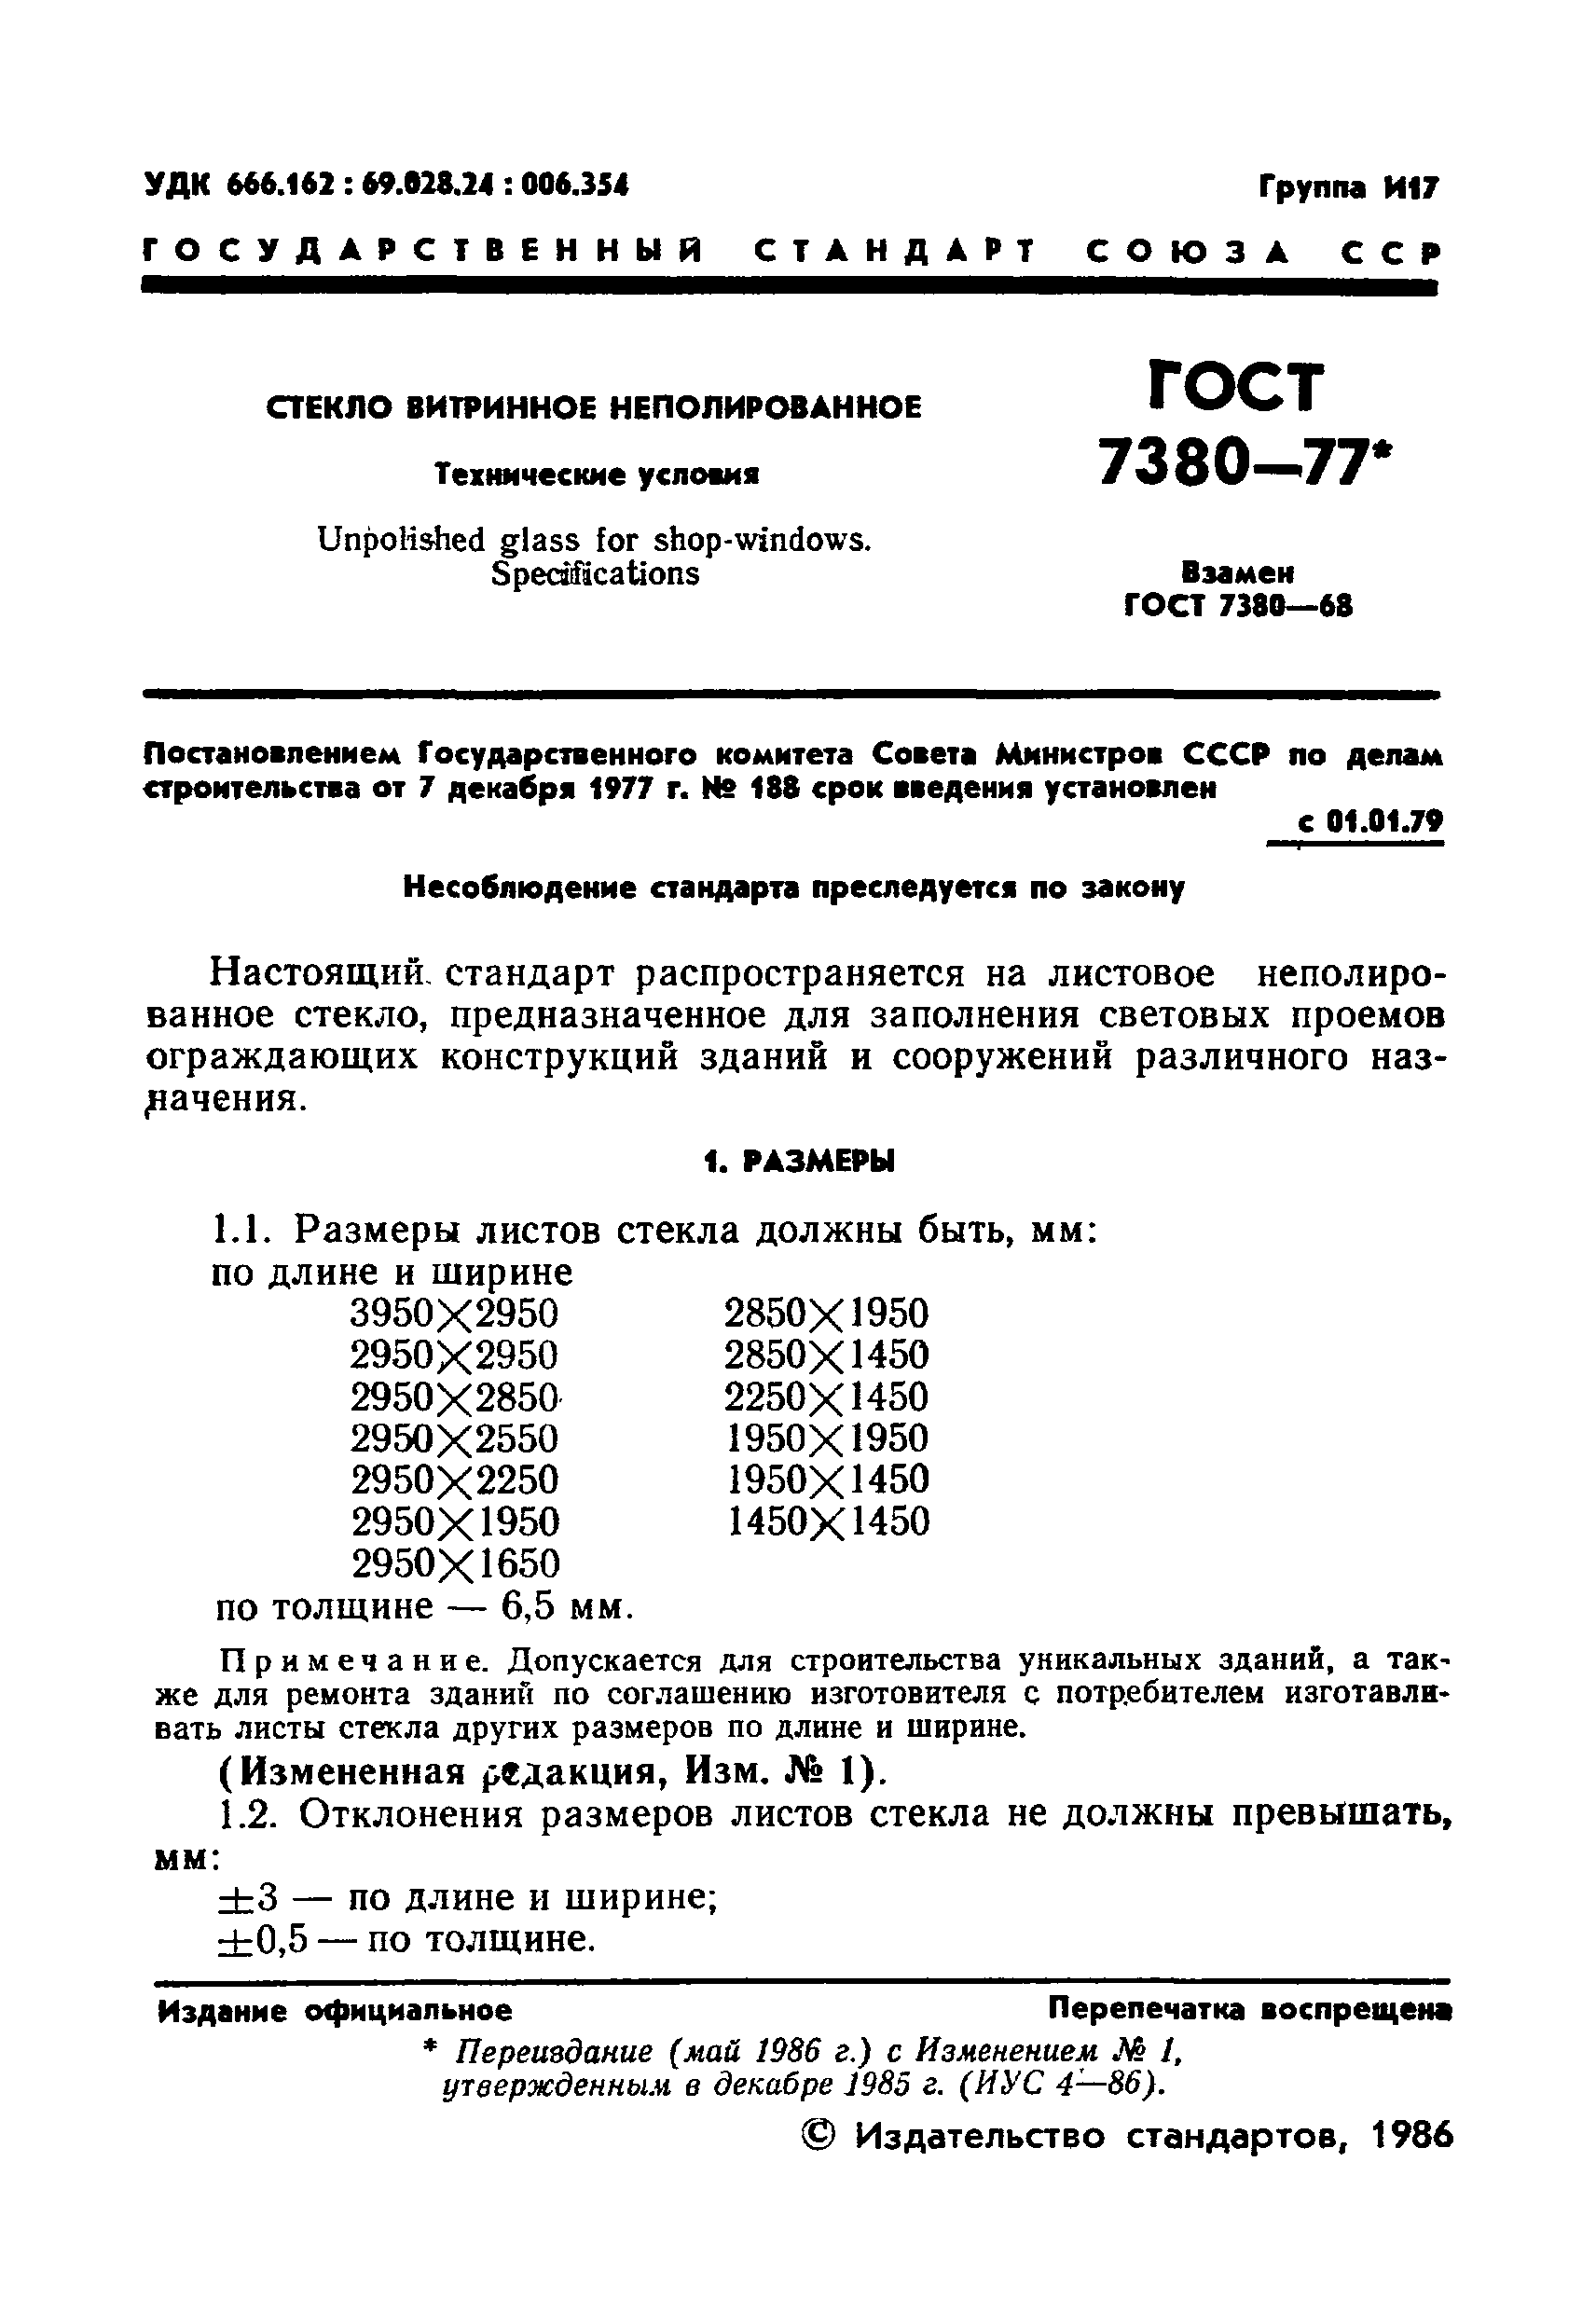 ГОСТ 7380-77